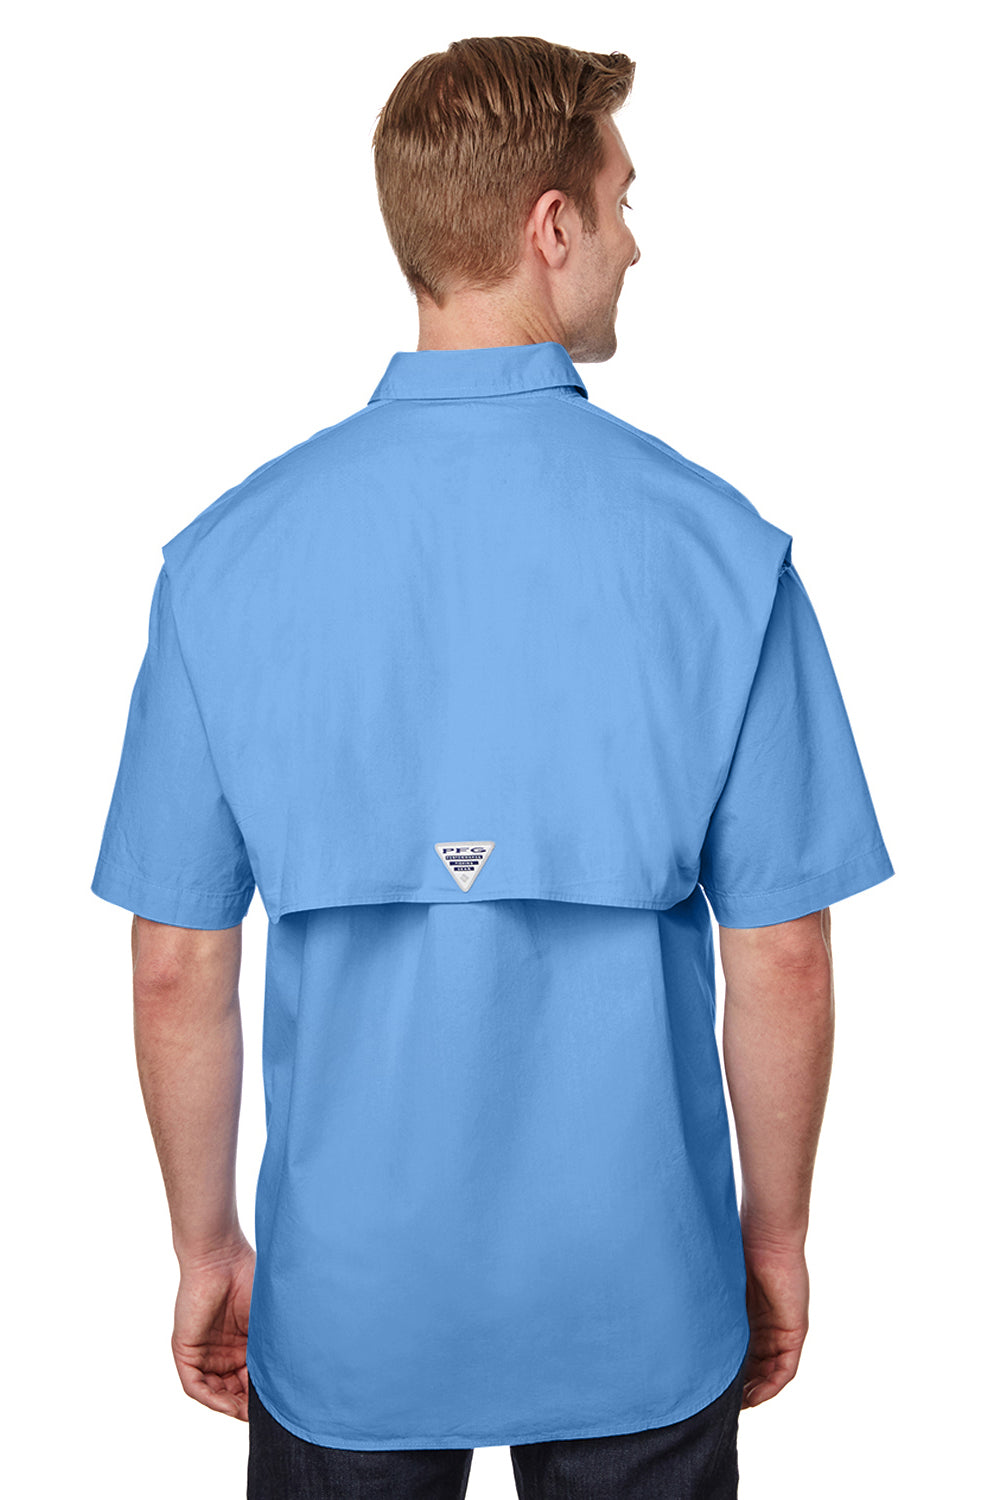 Columbia 7130 Mens Bonehead Short Sleeve Button Down Shirt w/ Double Pockets White Cap Blue Back